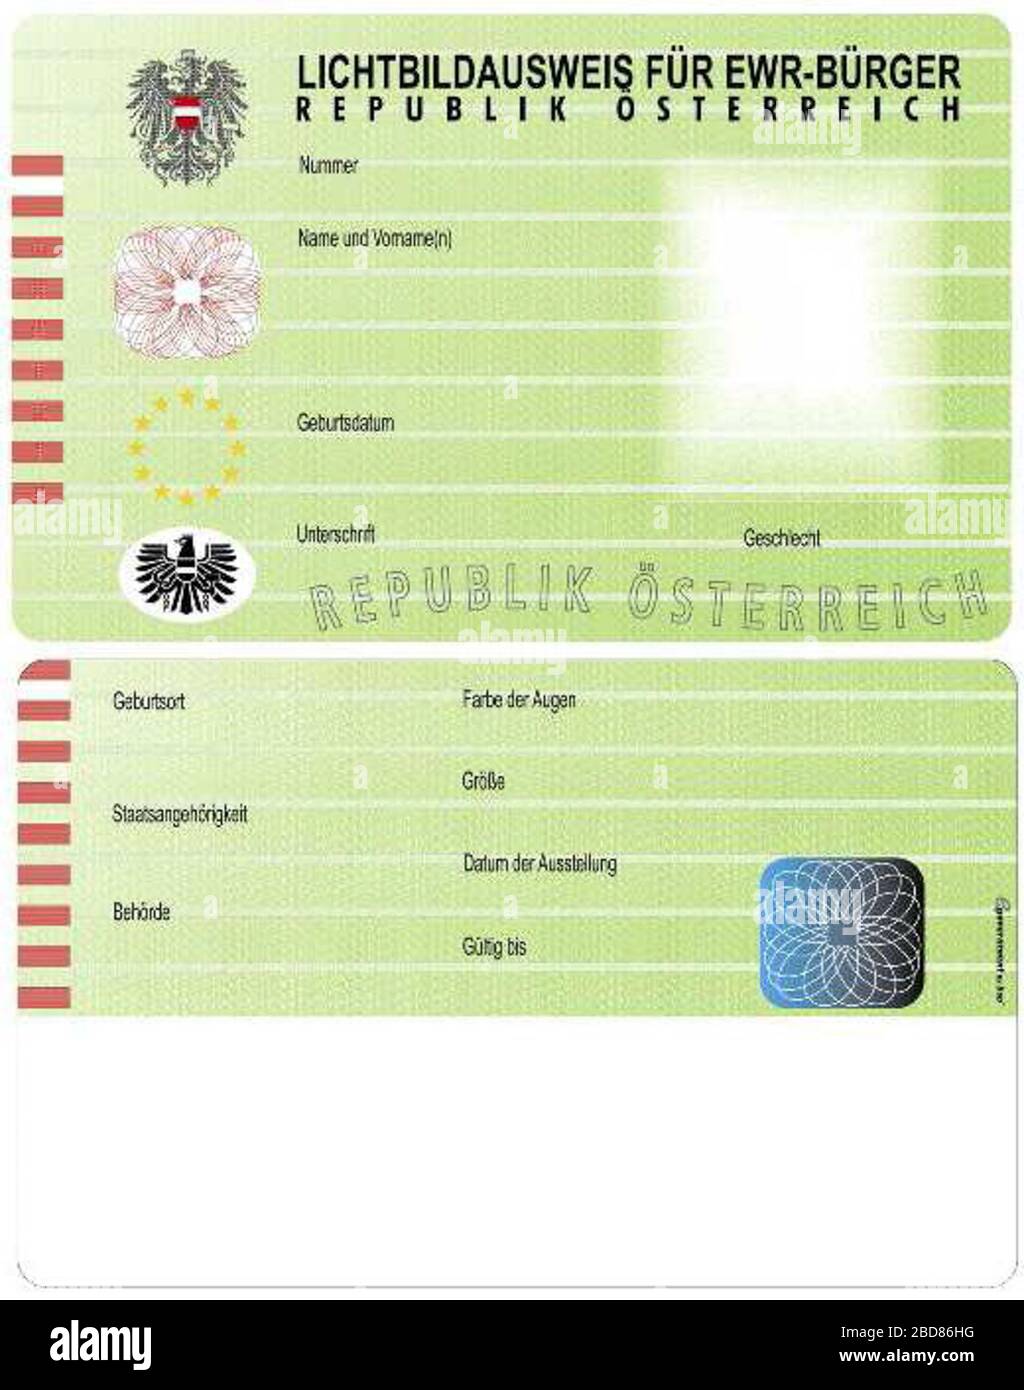 Italiano: Carta d'identità per cittadini SEE (Austria) Deutsch:  Lichtbildausweis für EWR-Bürger (Österreich); 28 giugno 2011; BGBl. II Nr.  201/2011; BMI (Bundesministerium für Inneres), Wien, caricato da Opihuck  (talk); ' Foto stock - Alamy